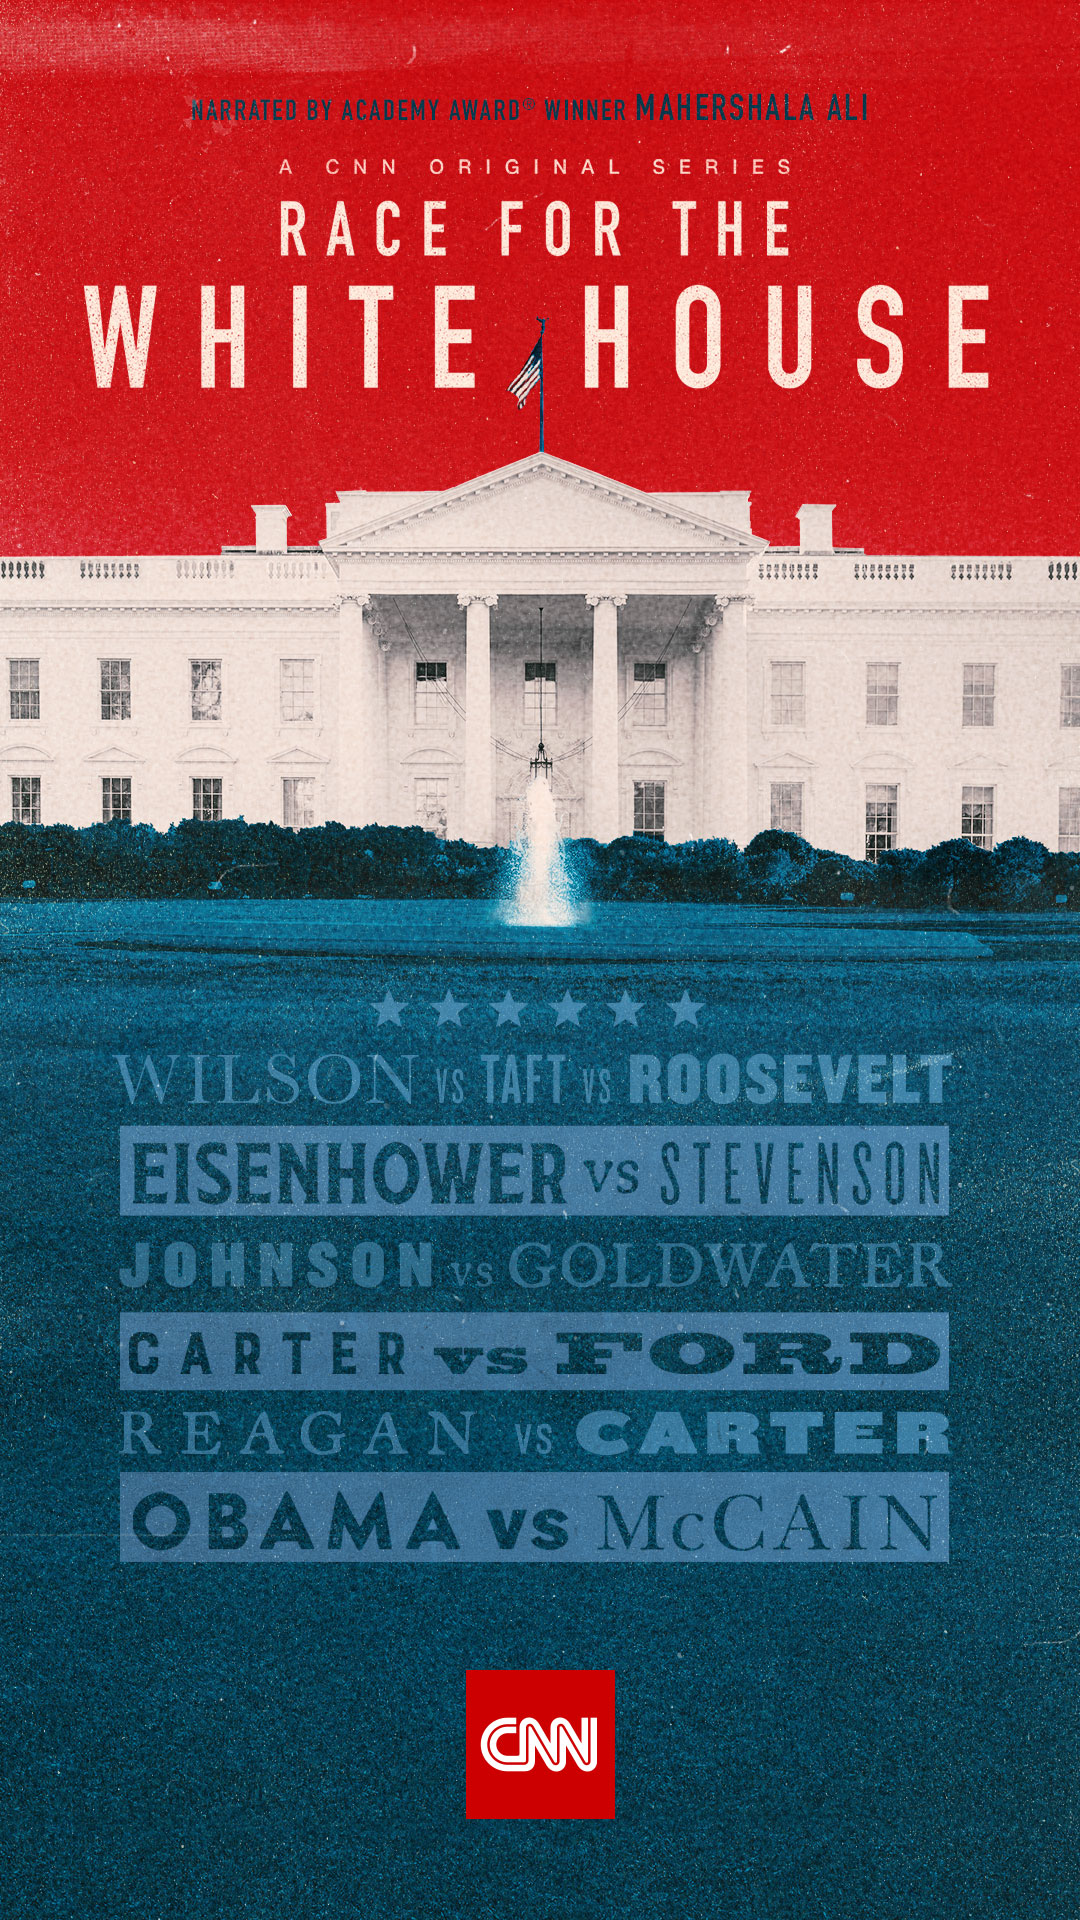 CNN's Race for the White House poster